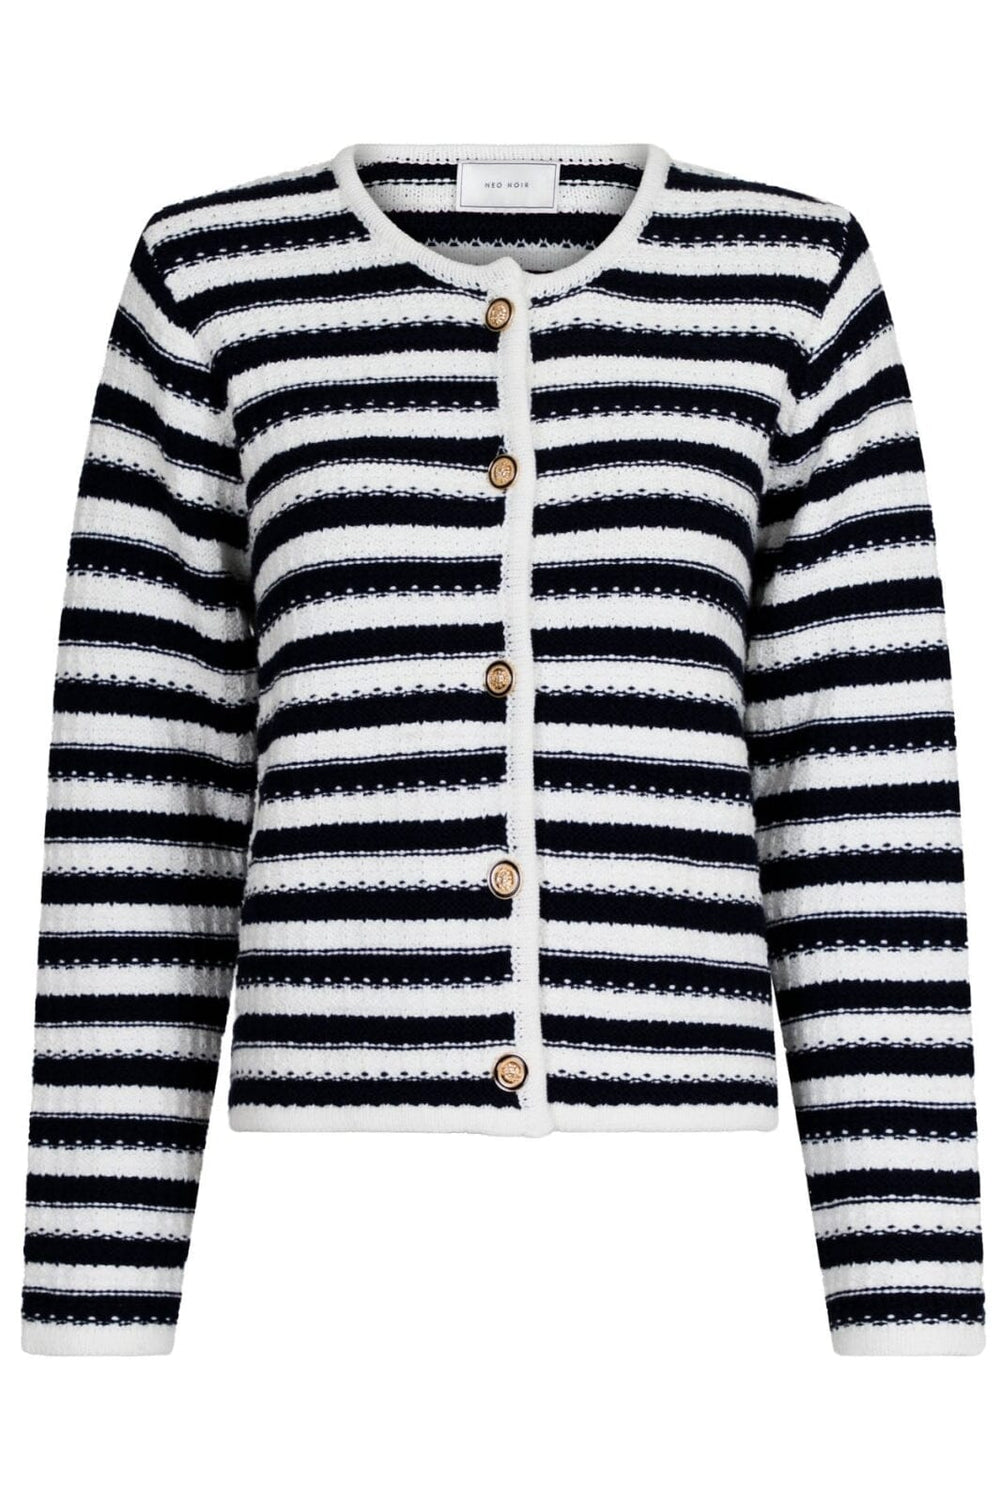 Neo Noir - Limone Stripe Knit Jacket - Navy/White Jakker 